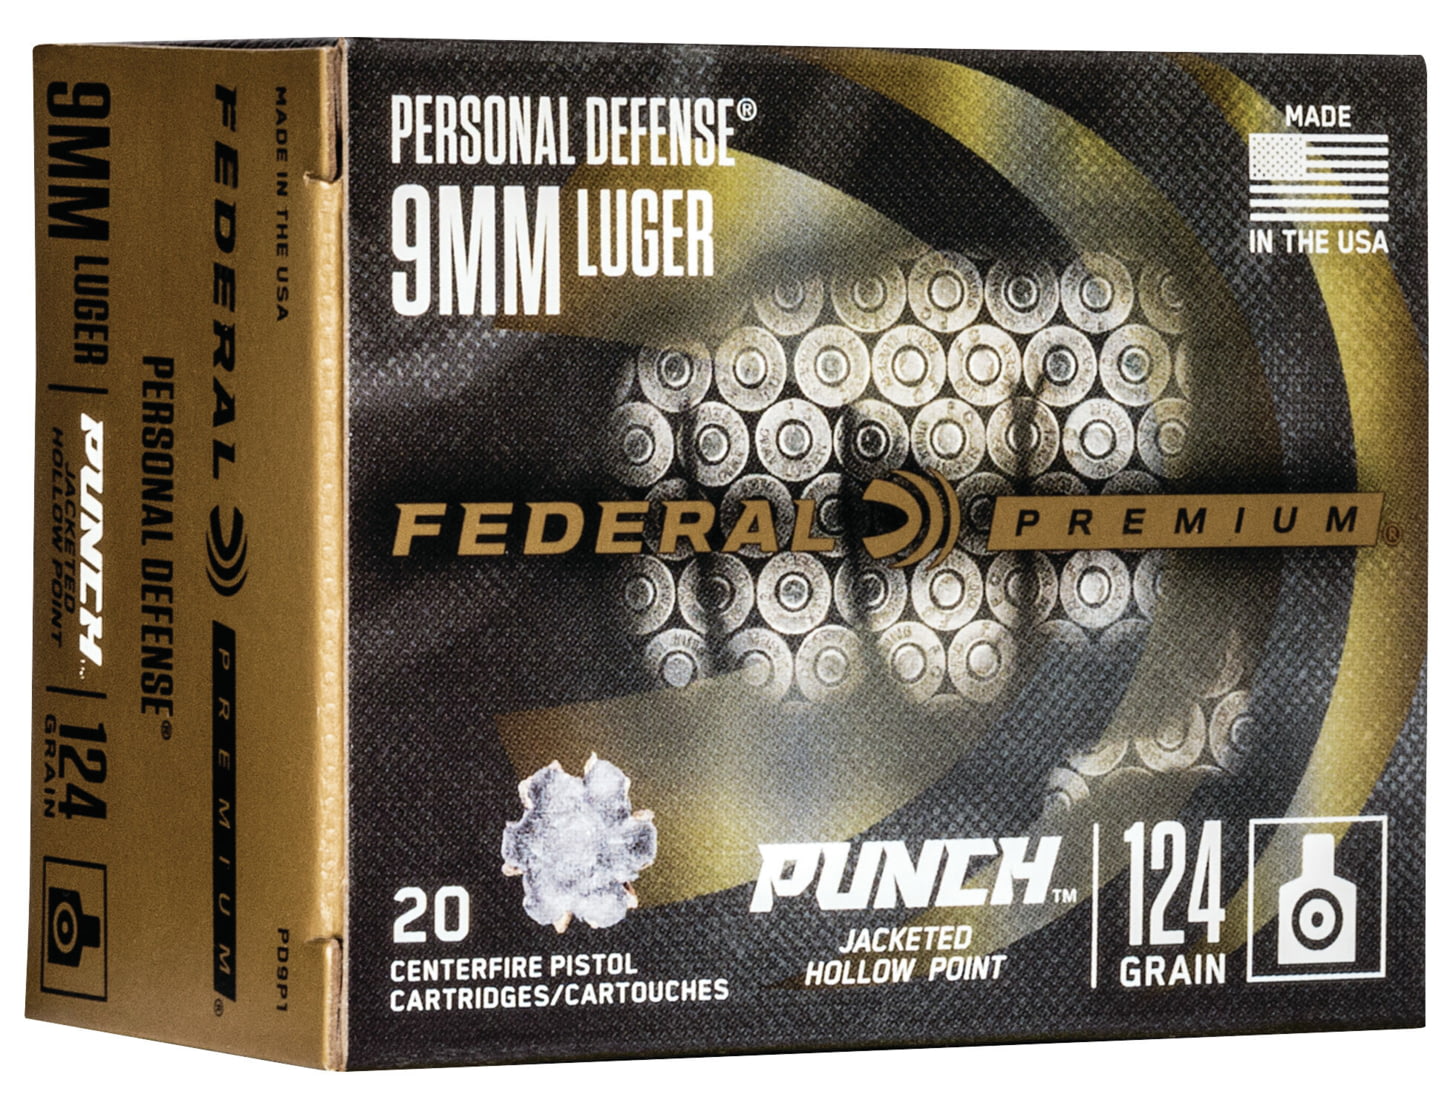 Federal Premium Centerfire Handgun Ammunition 9mm Luger 124 grain Jacketed Hollow Point Centerfire Pistol Ammunition